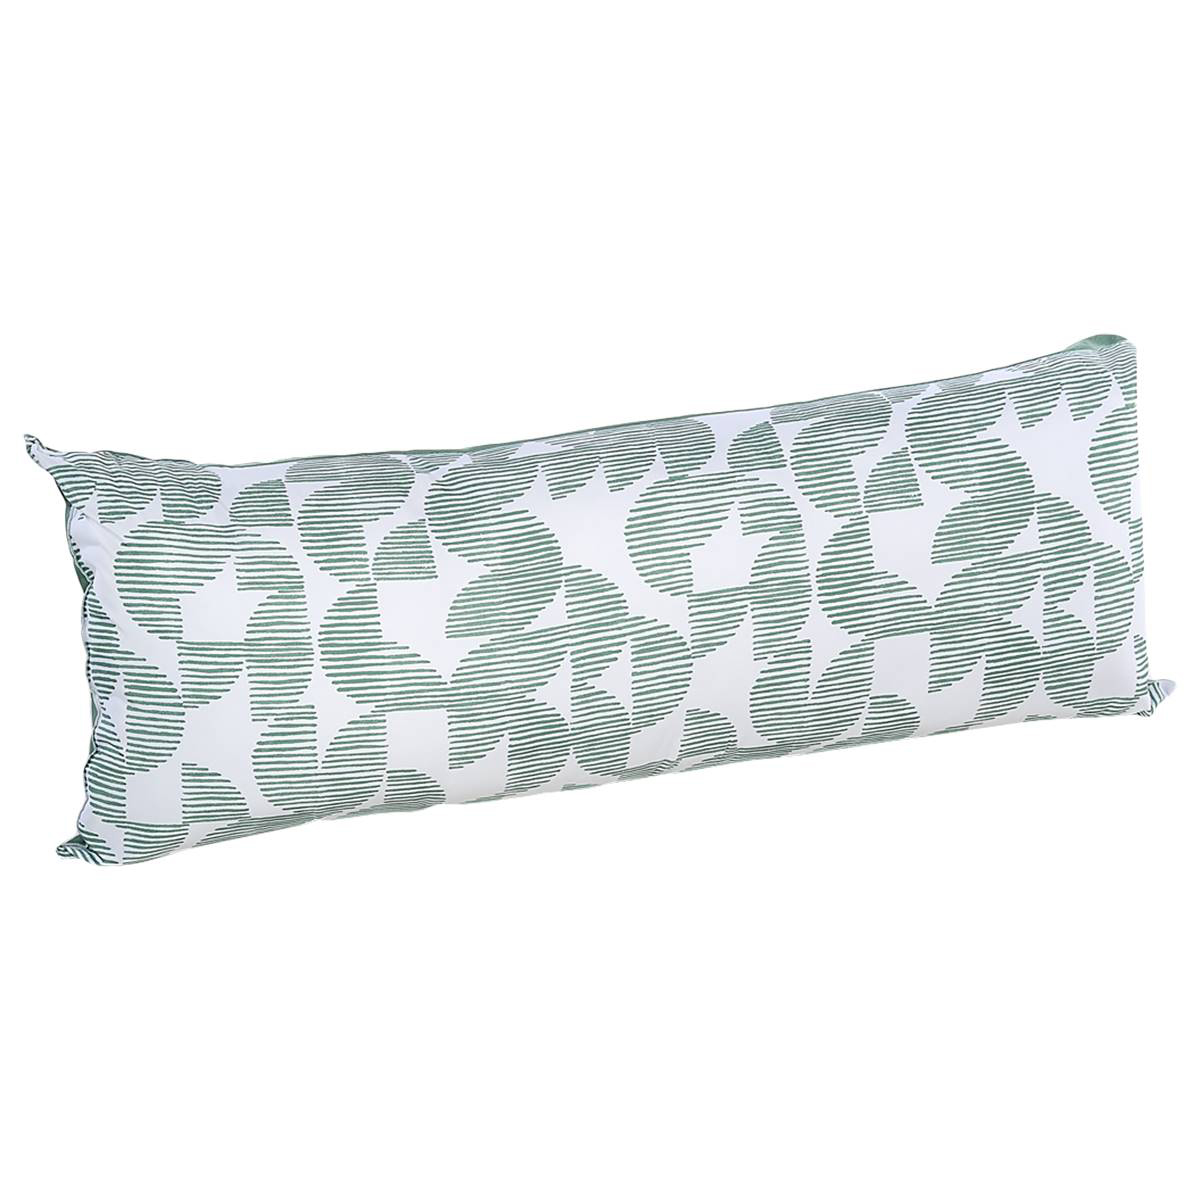 Sealy(R) Body Pillow - Green